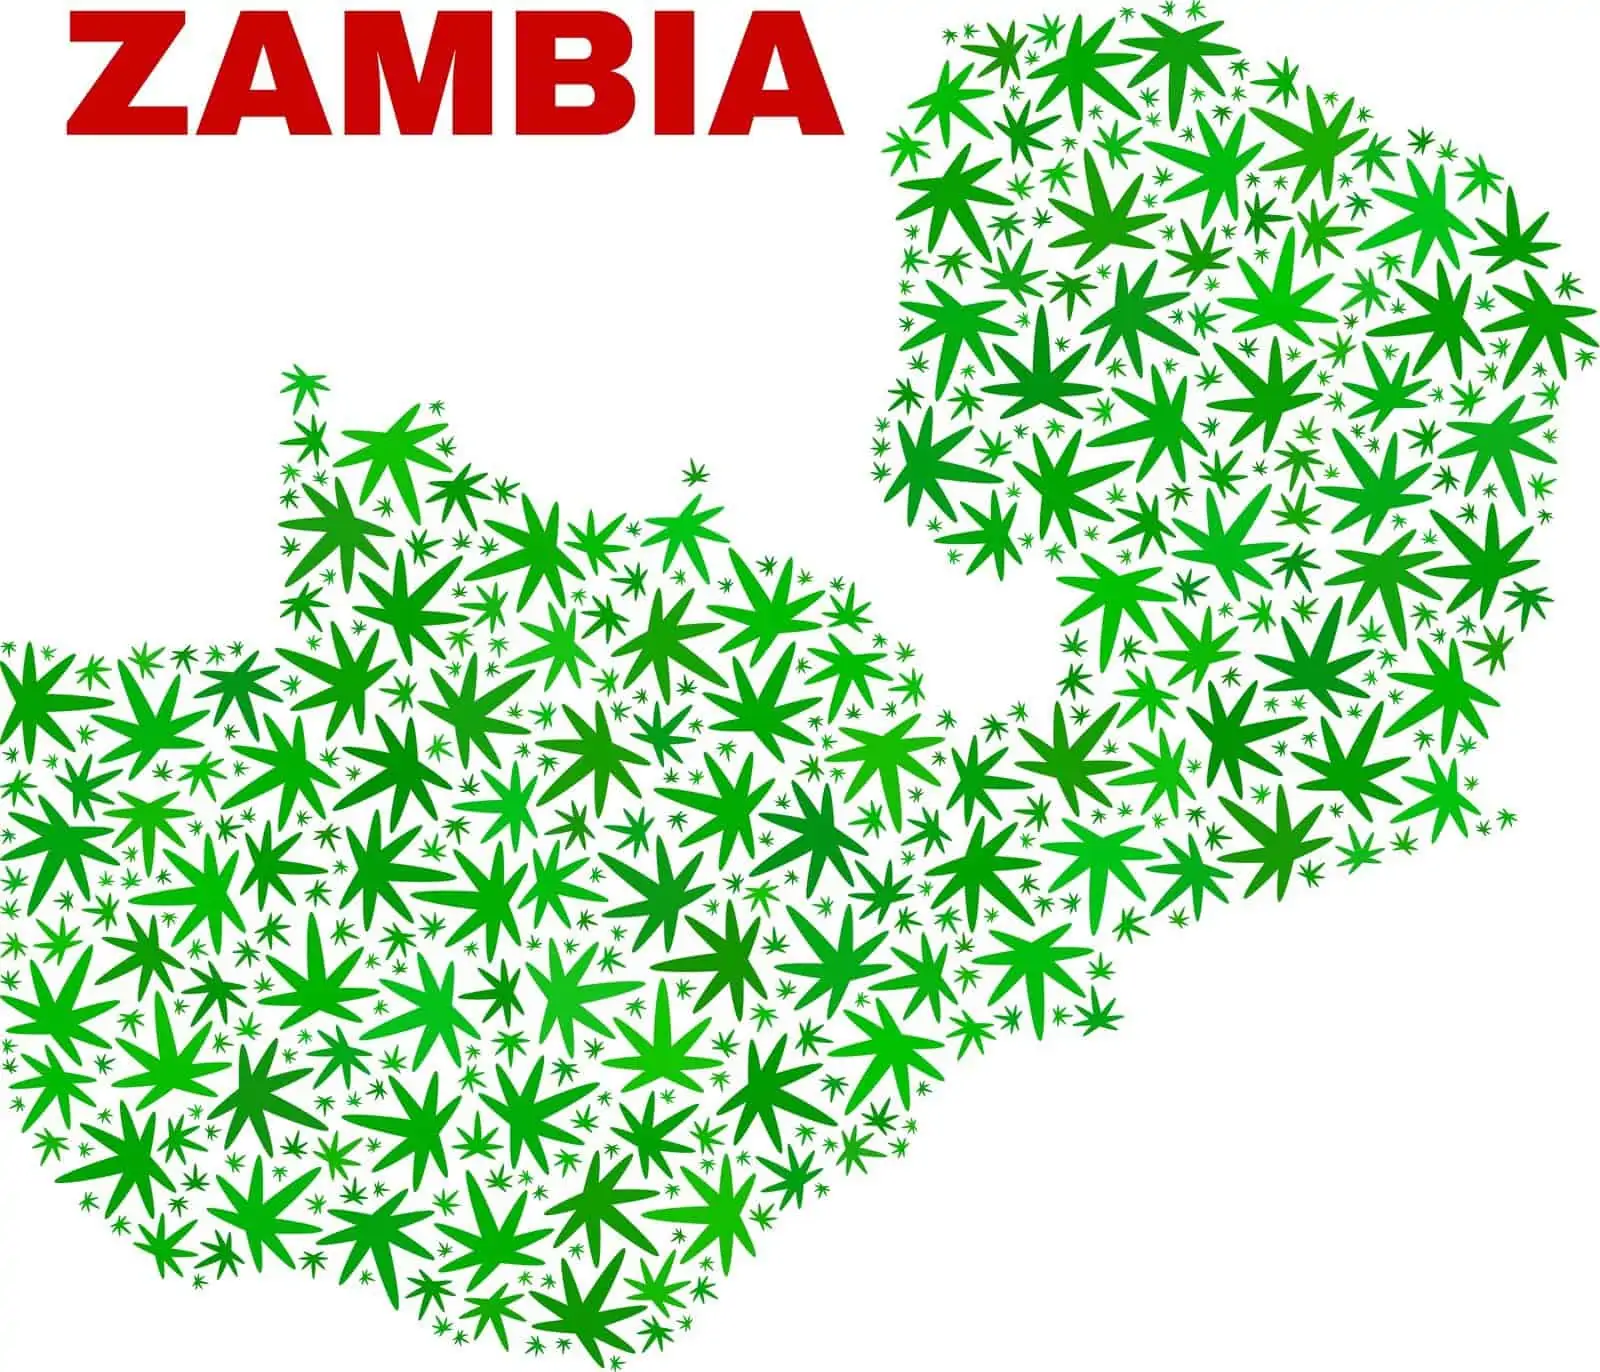 Zambia Legalizes Marijuana Growing